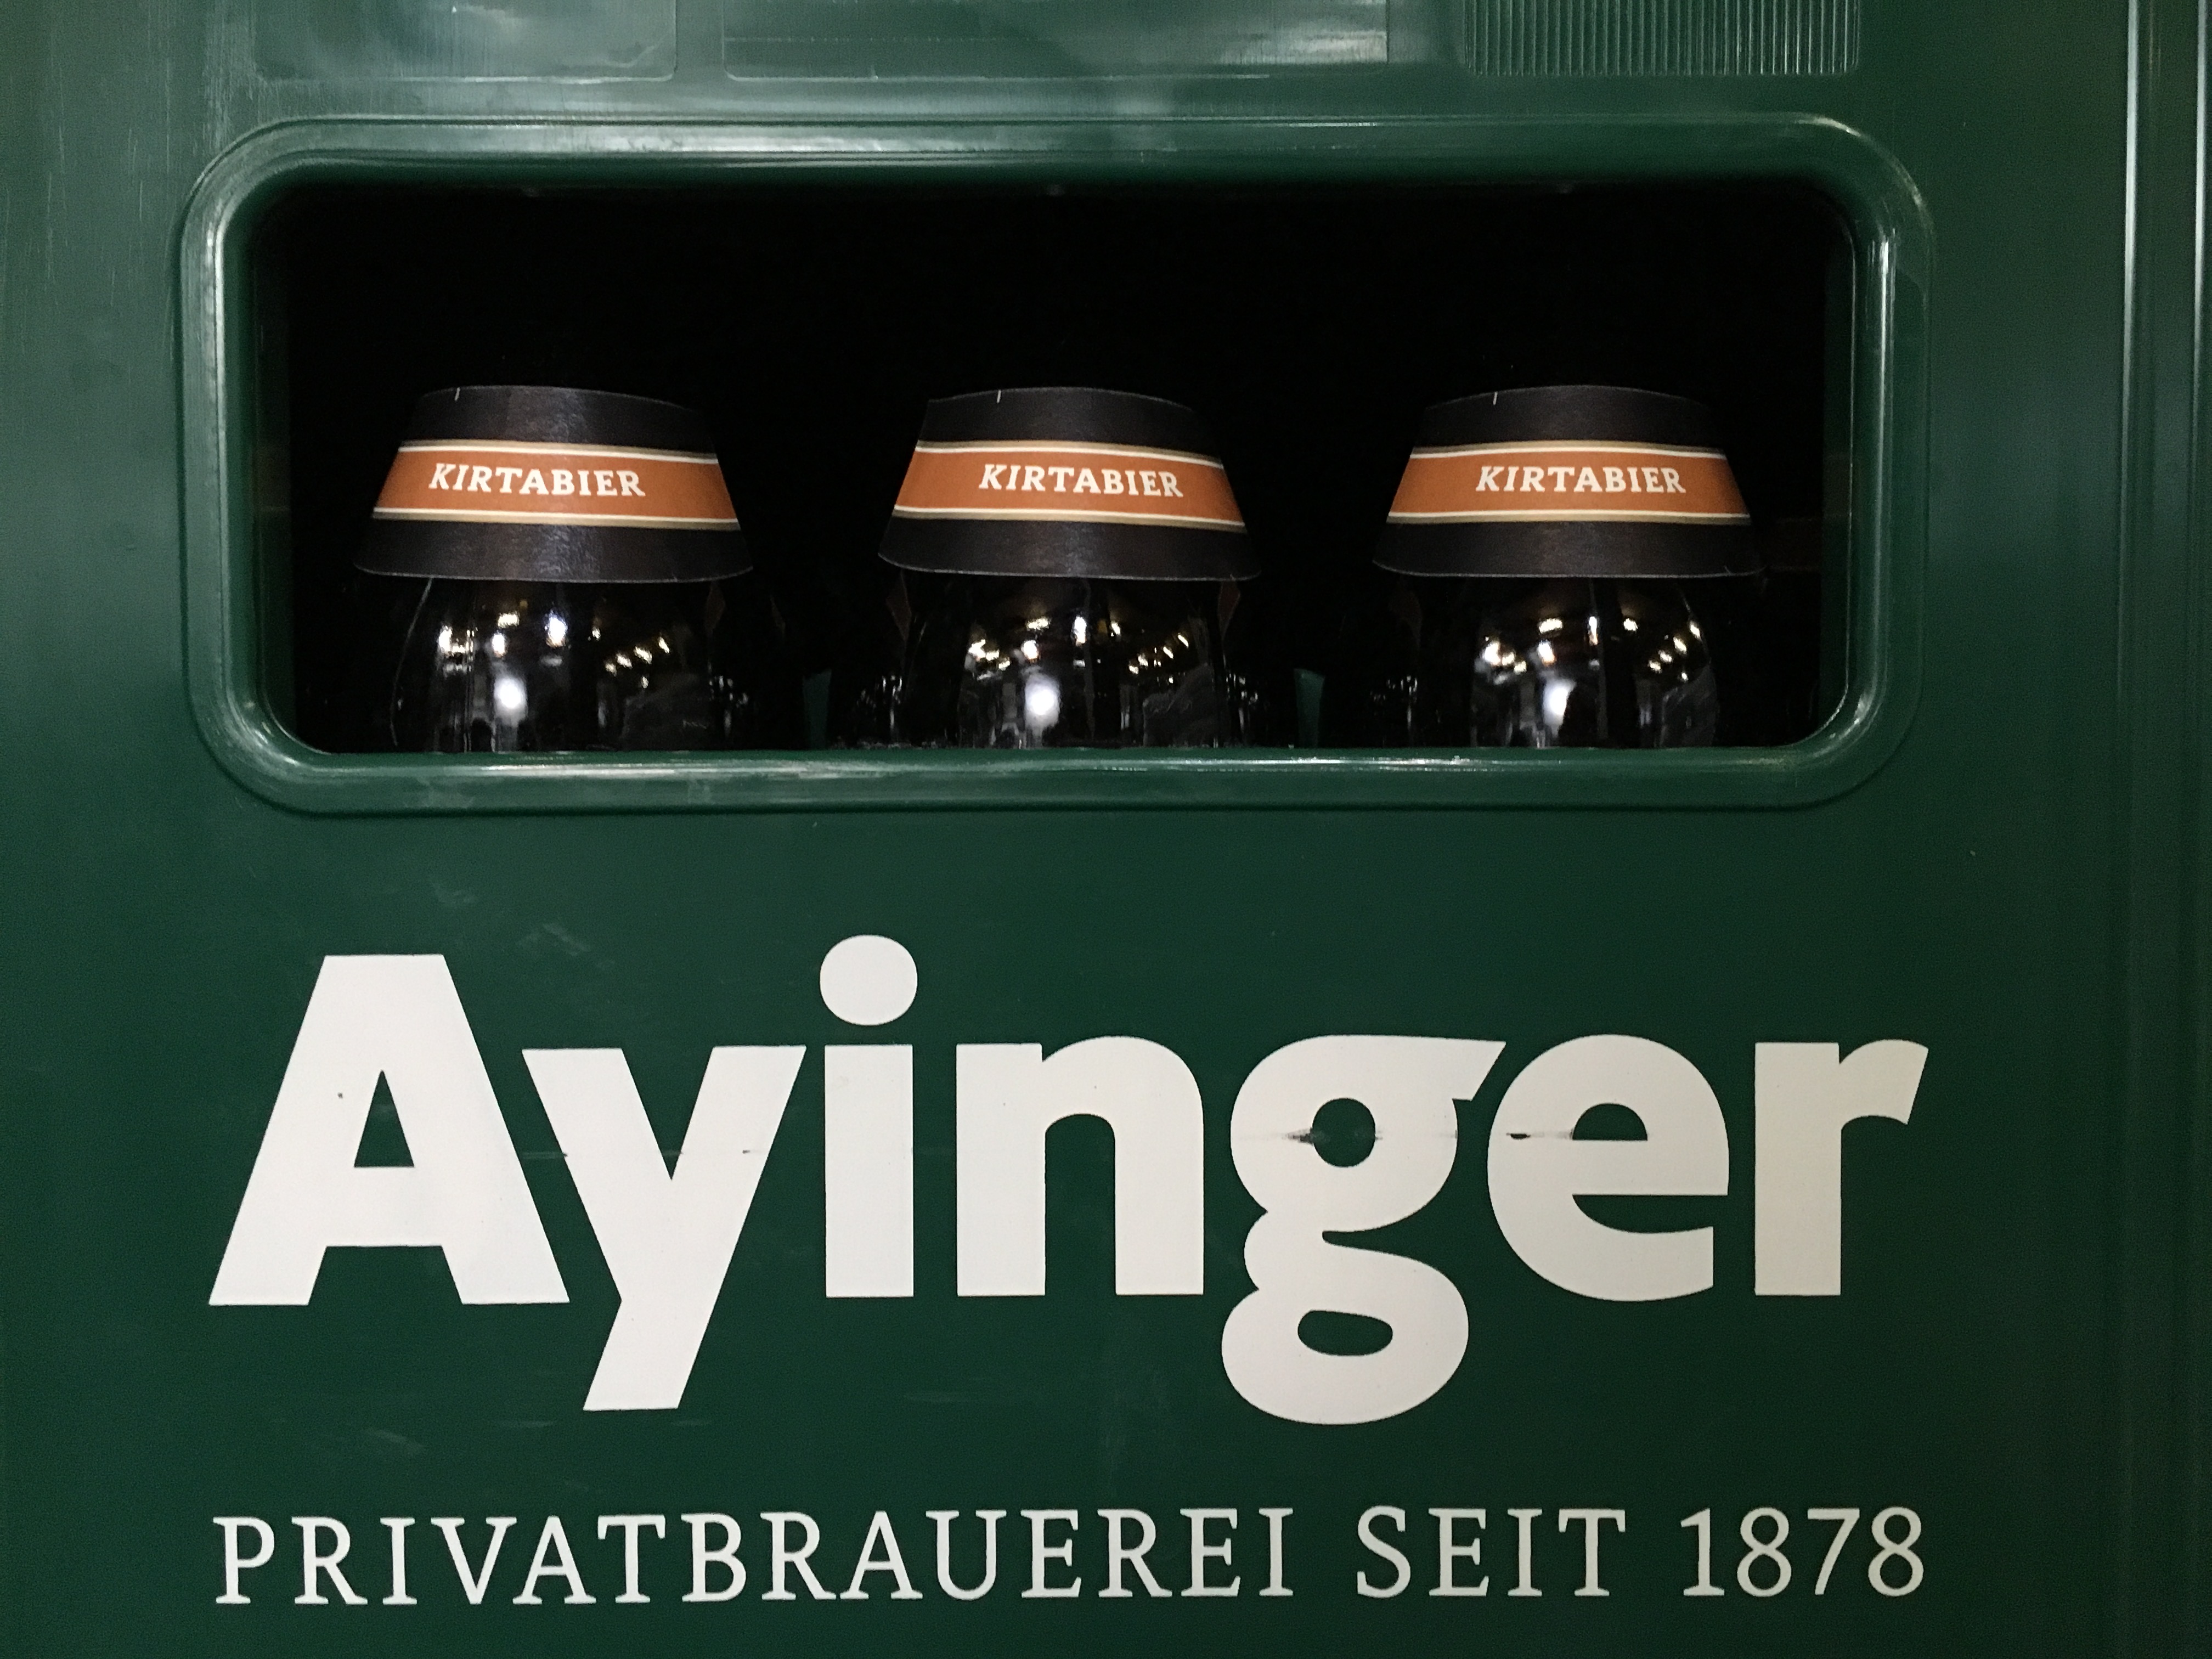 Bottles of Ayinger Kirtabier ready to ship.